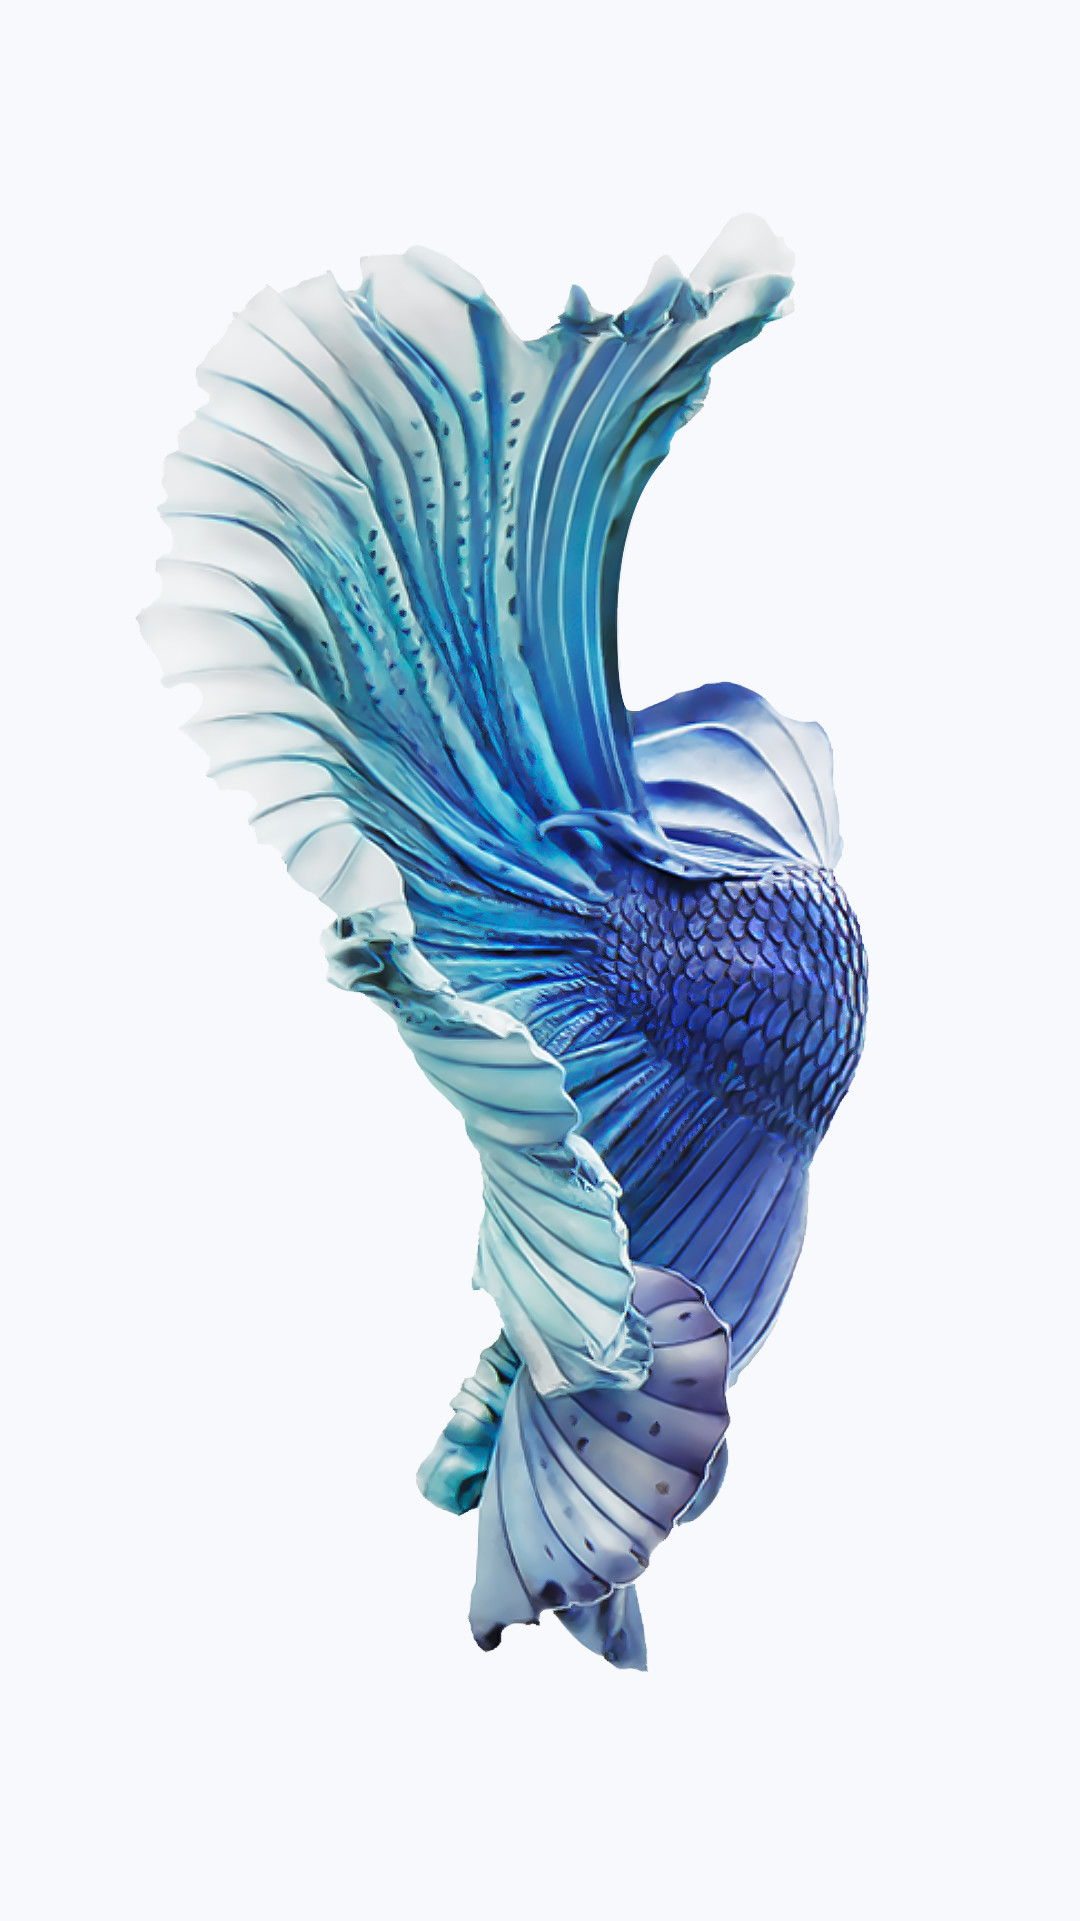 1080x1921 iPhone-6s-Silver-Blue-Fish-Wallpaper.png (1080Ã